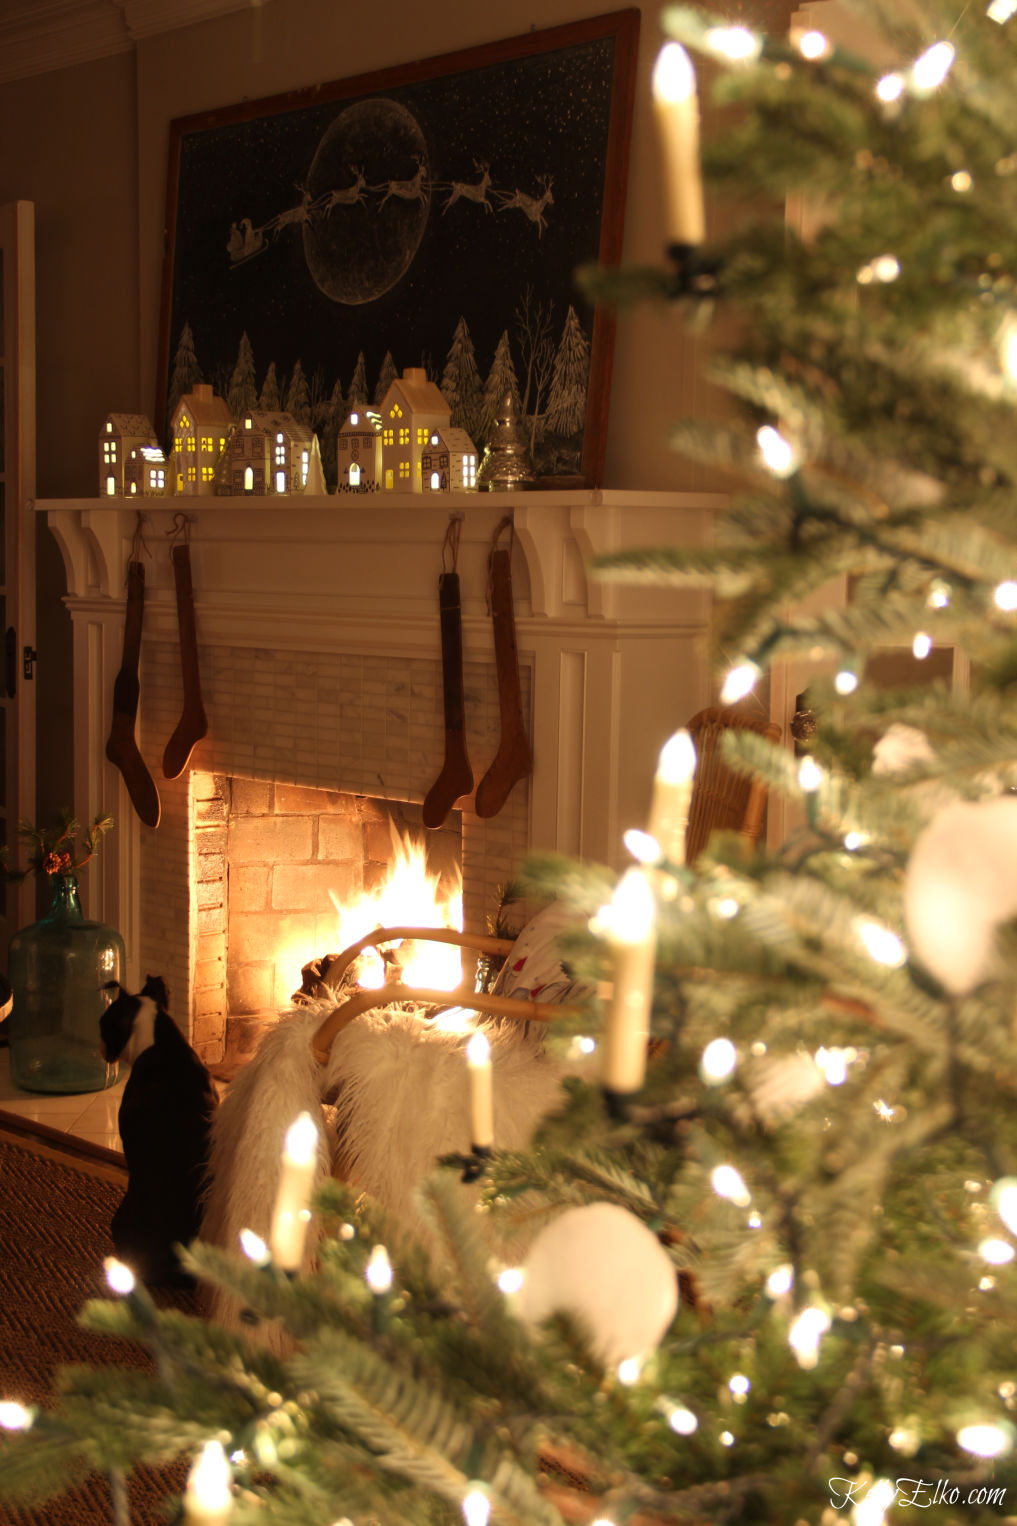 Beautiful Christmas home tour at night kellyelko.com #christmas #christmslights #christmasdecor #christmasdecorating #christmasdiningroom #vintagechristmas #retrochristmas #christmastrees #christmamantel 